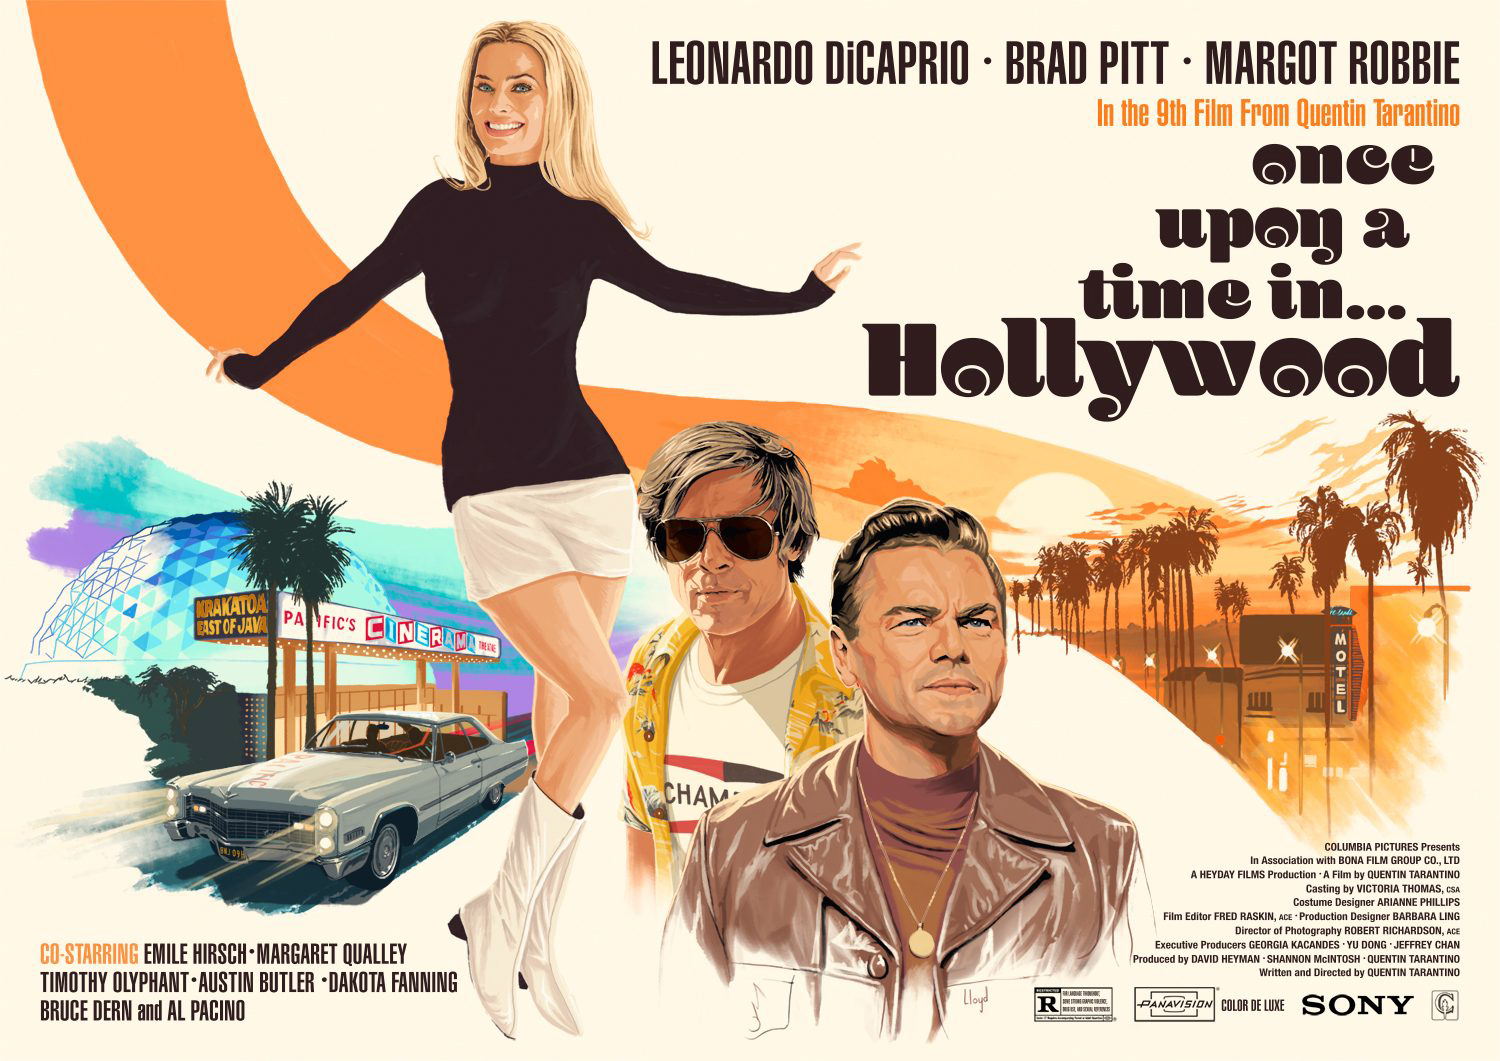 Brad Pitt Artwork - Hollywood Heartthrob | Poster